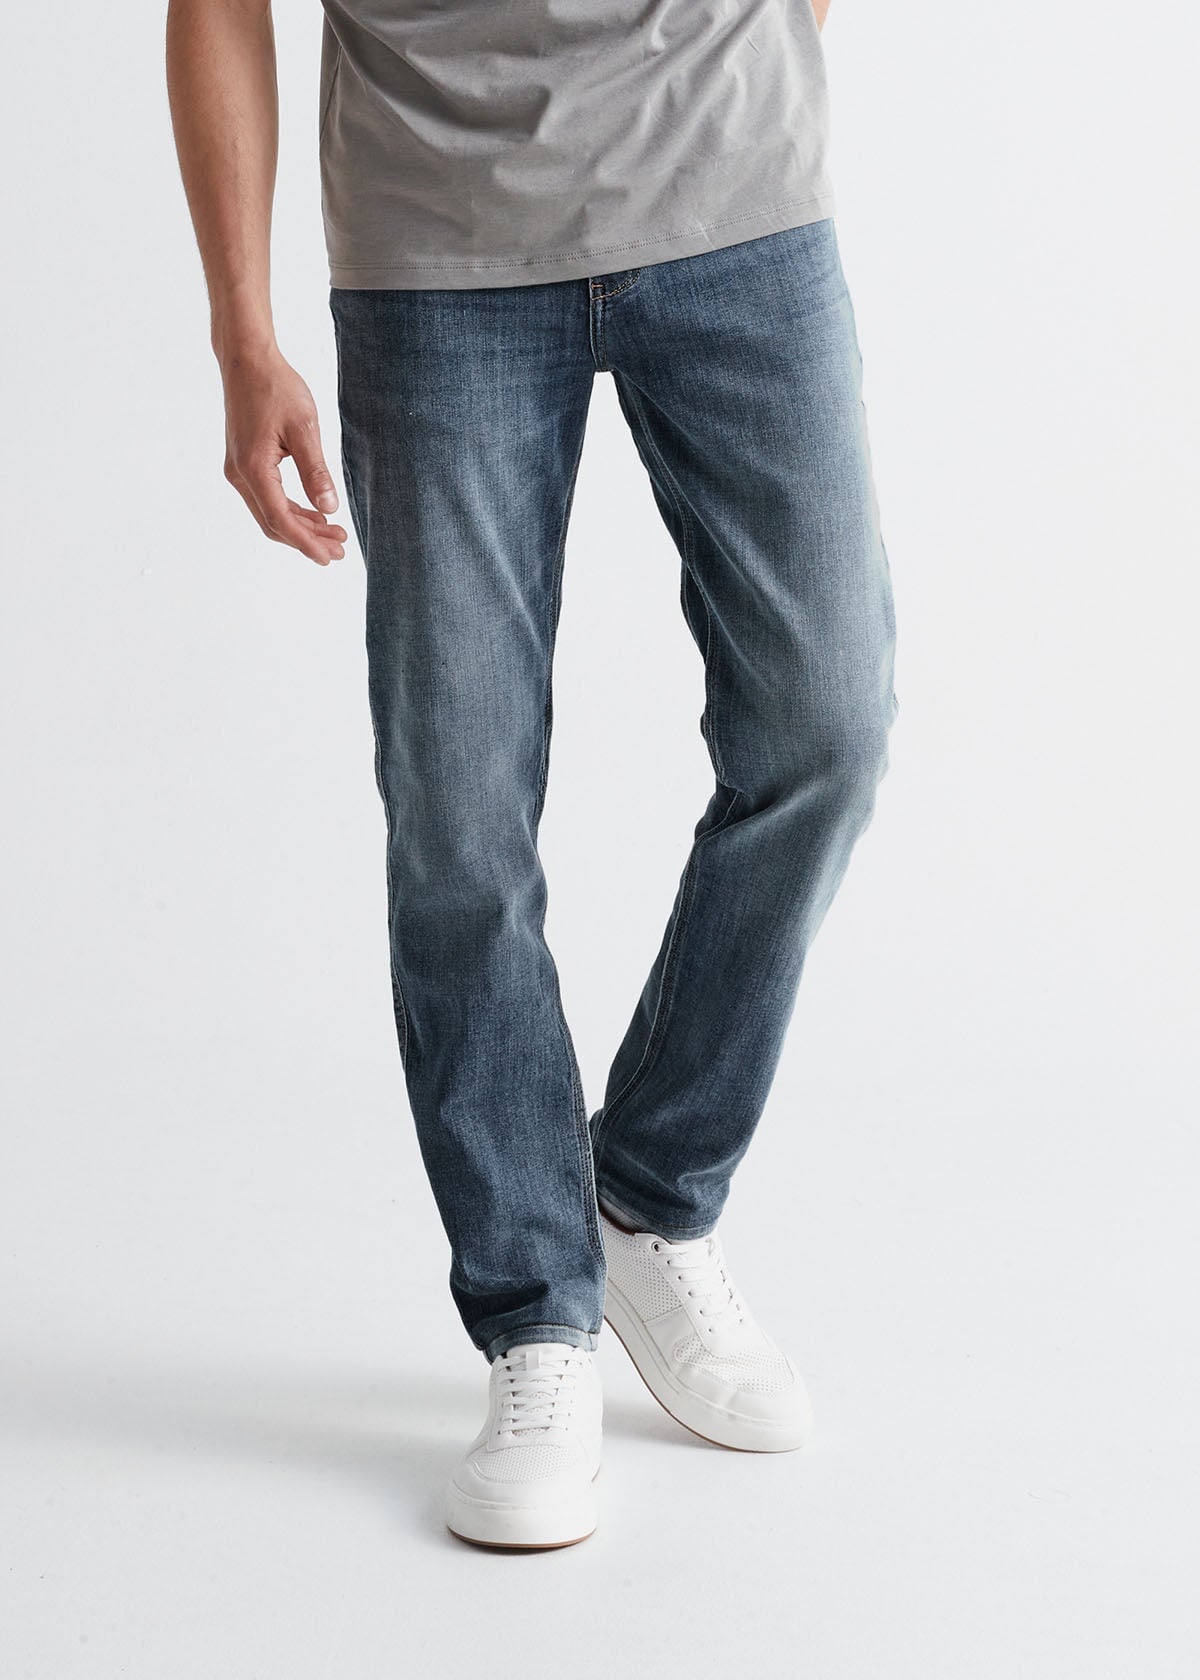 mens slim fit light blue stretch jeans front